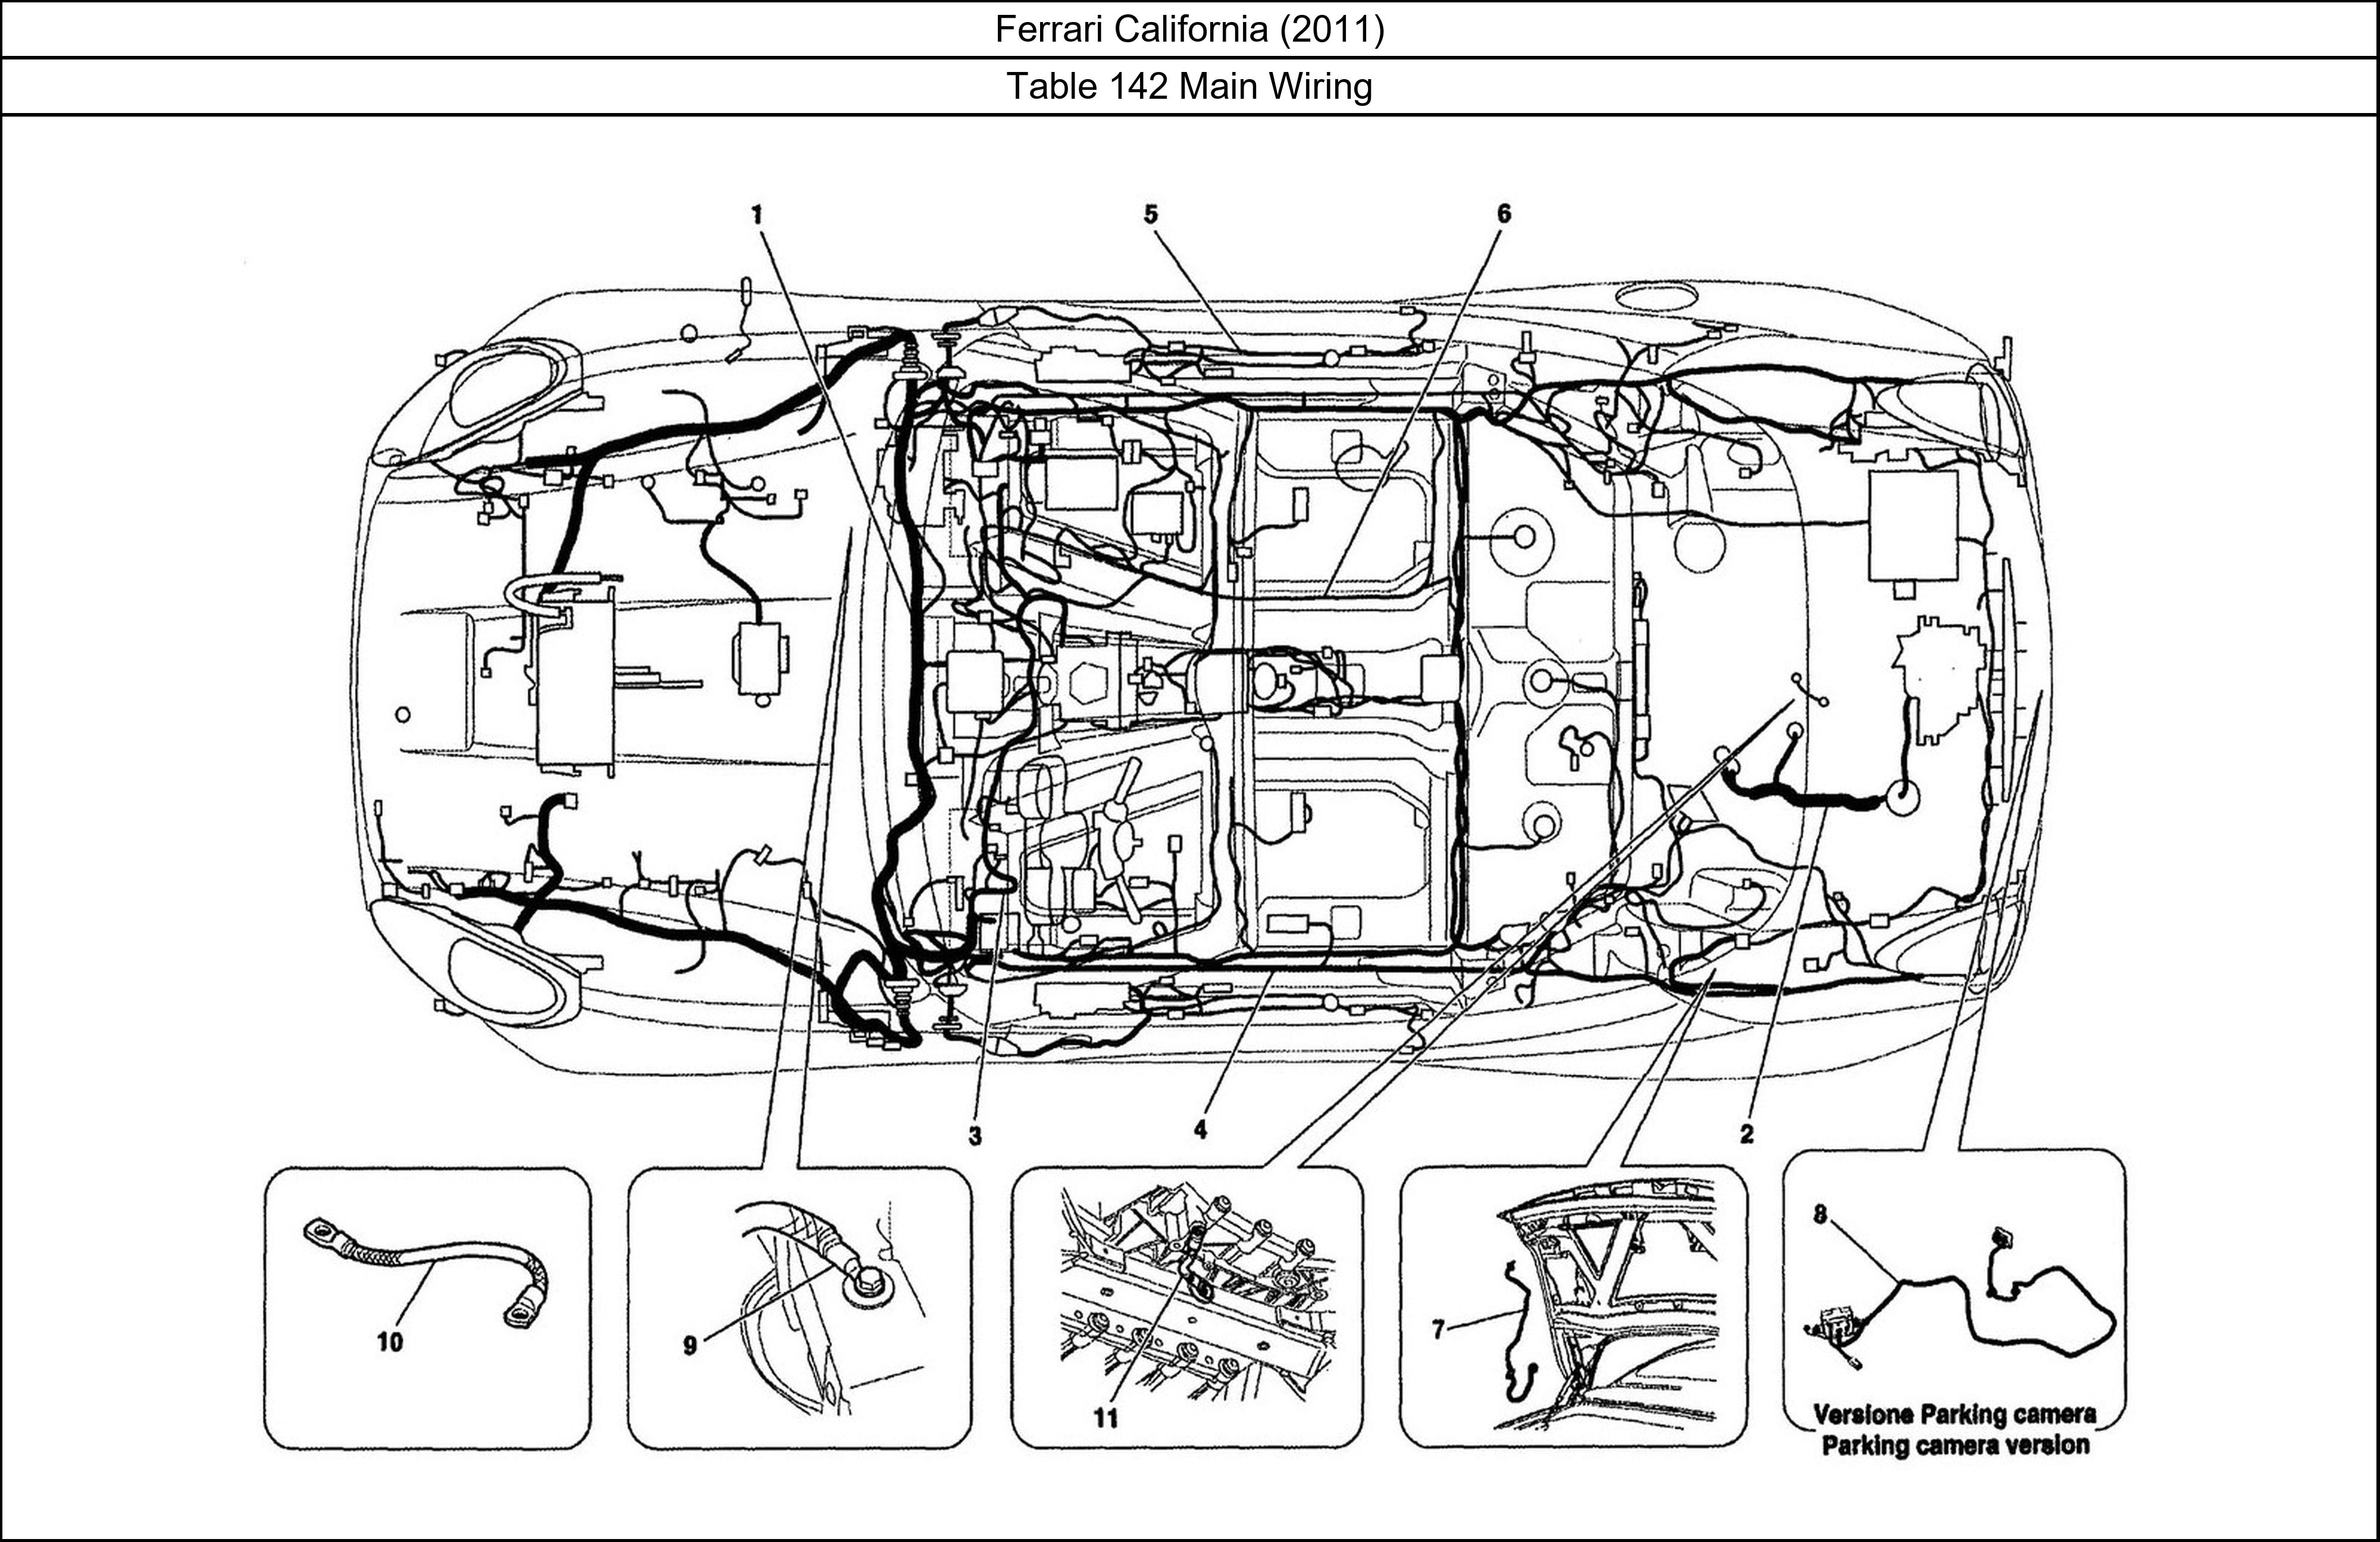 Ferrari Parts Ferrari California (2011) Table 142 Main Wiring